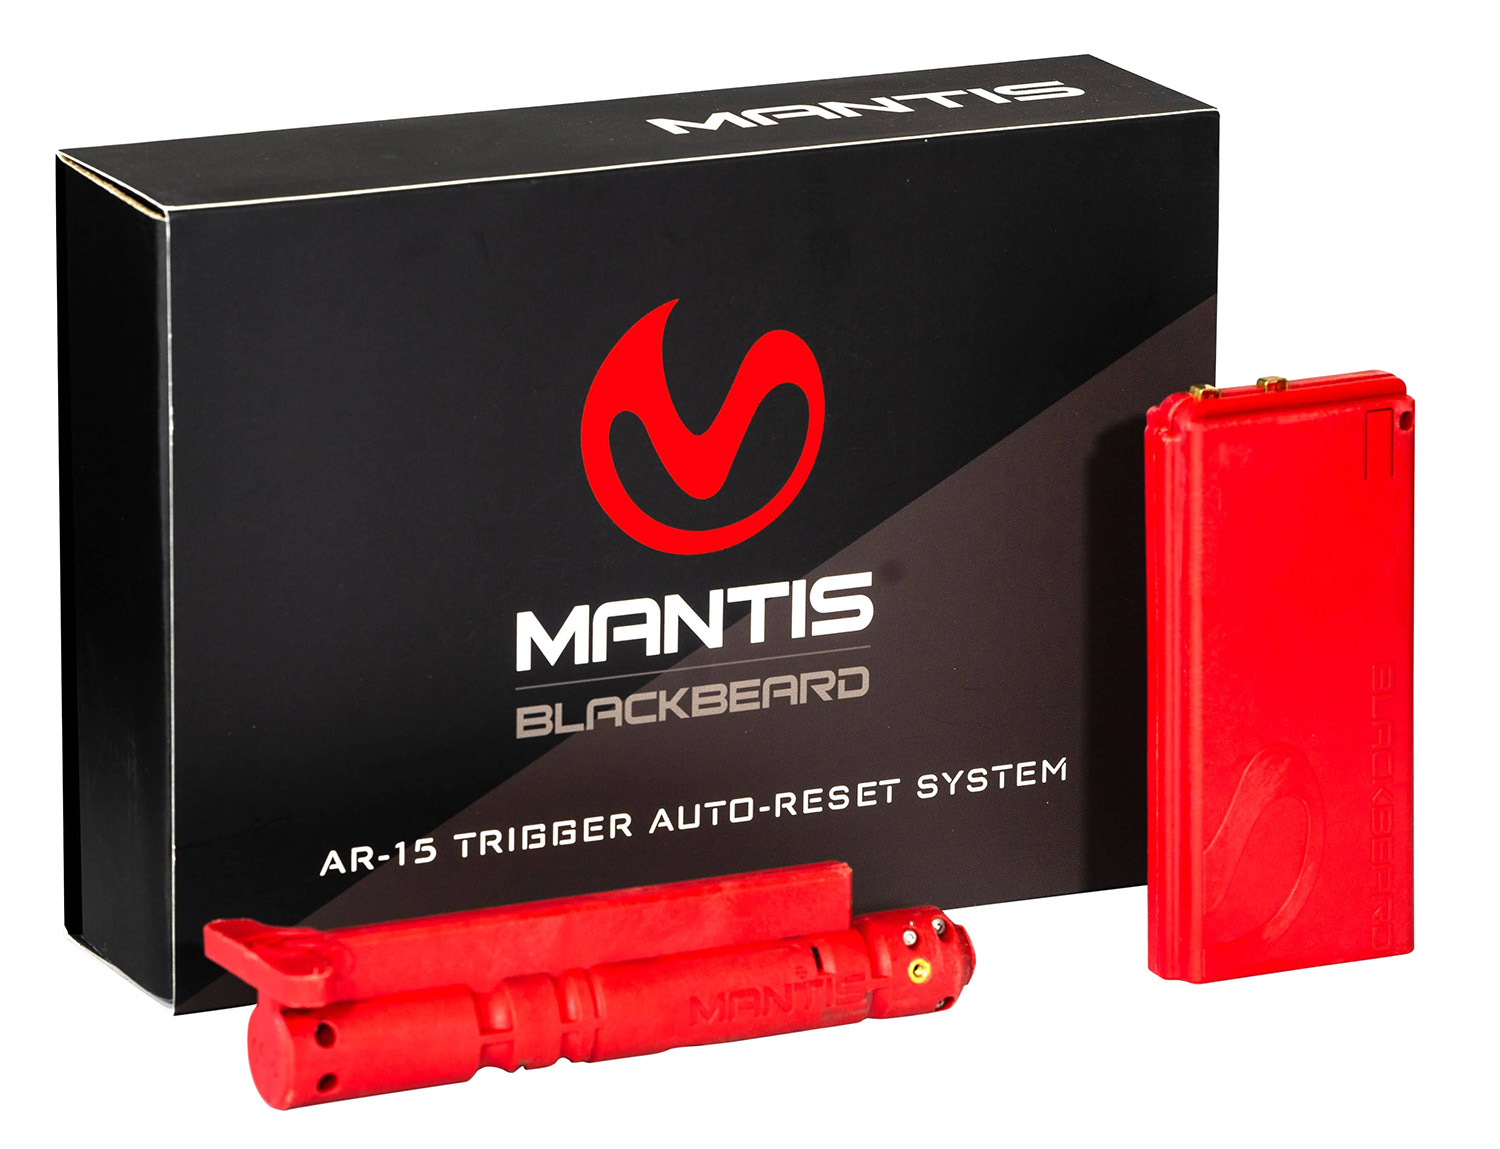 Mantis MT-5002 Blackbeard Trigger System Red Laser AR-15 650 nm Wavelength